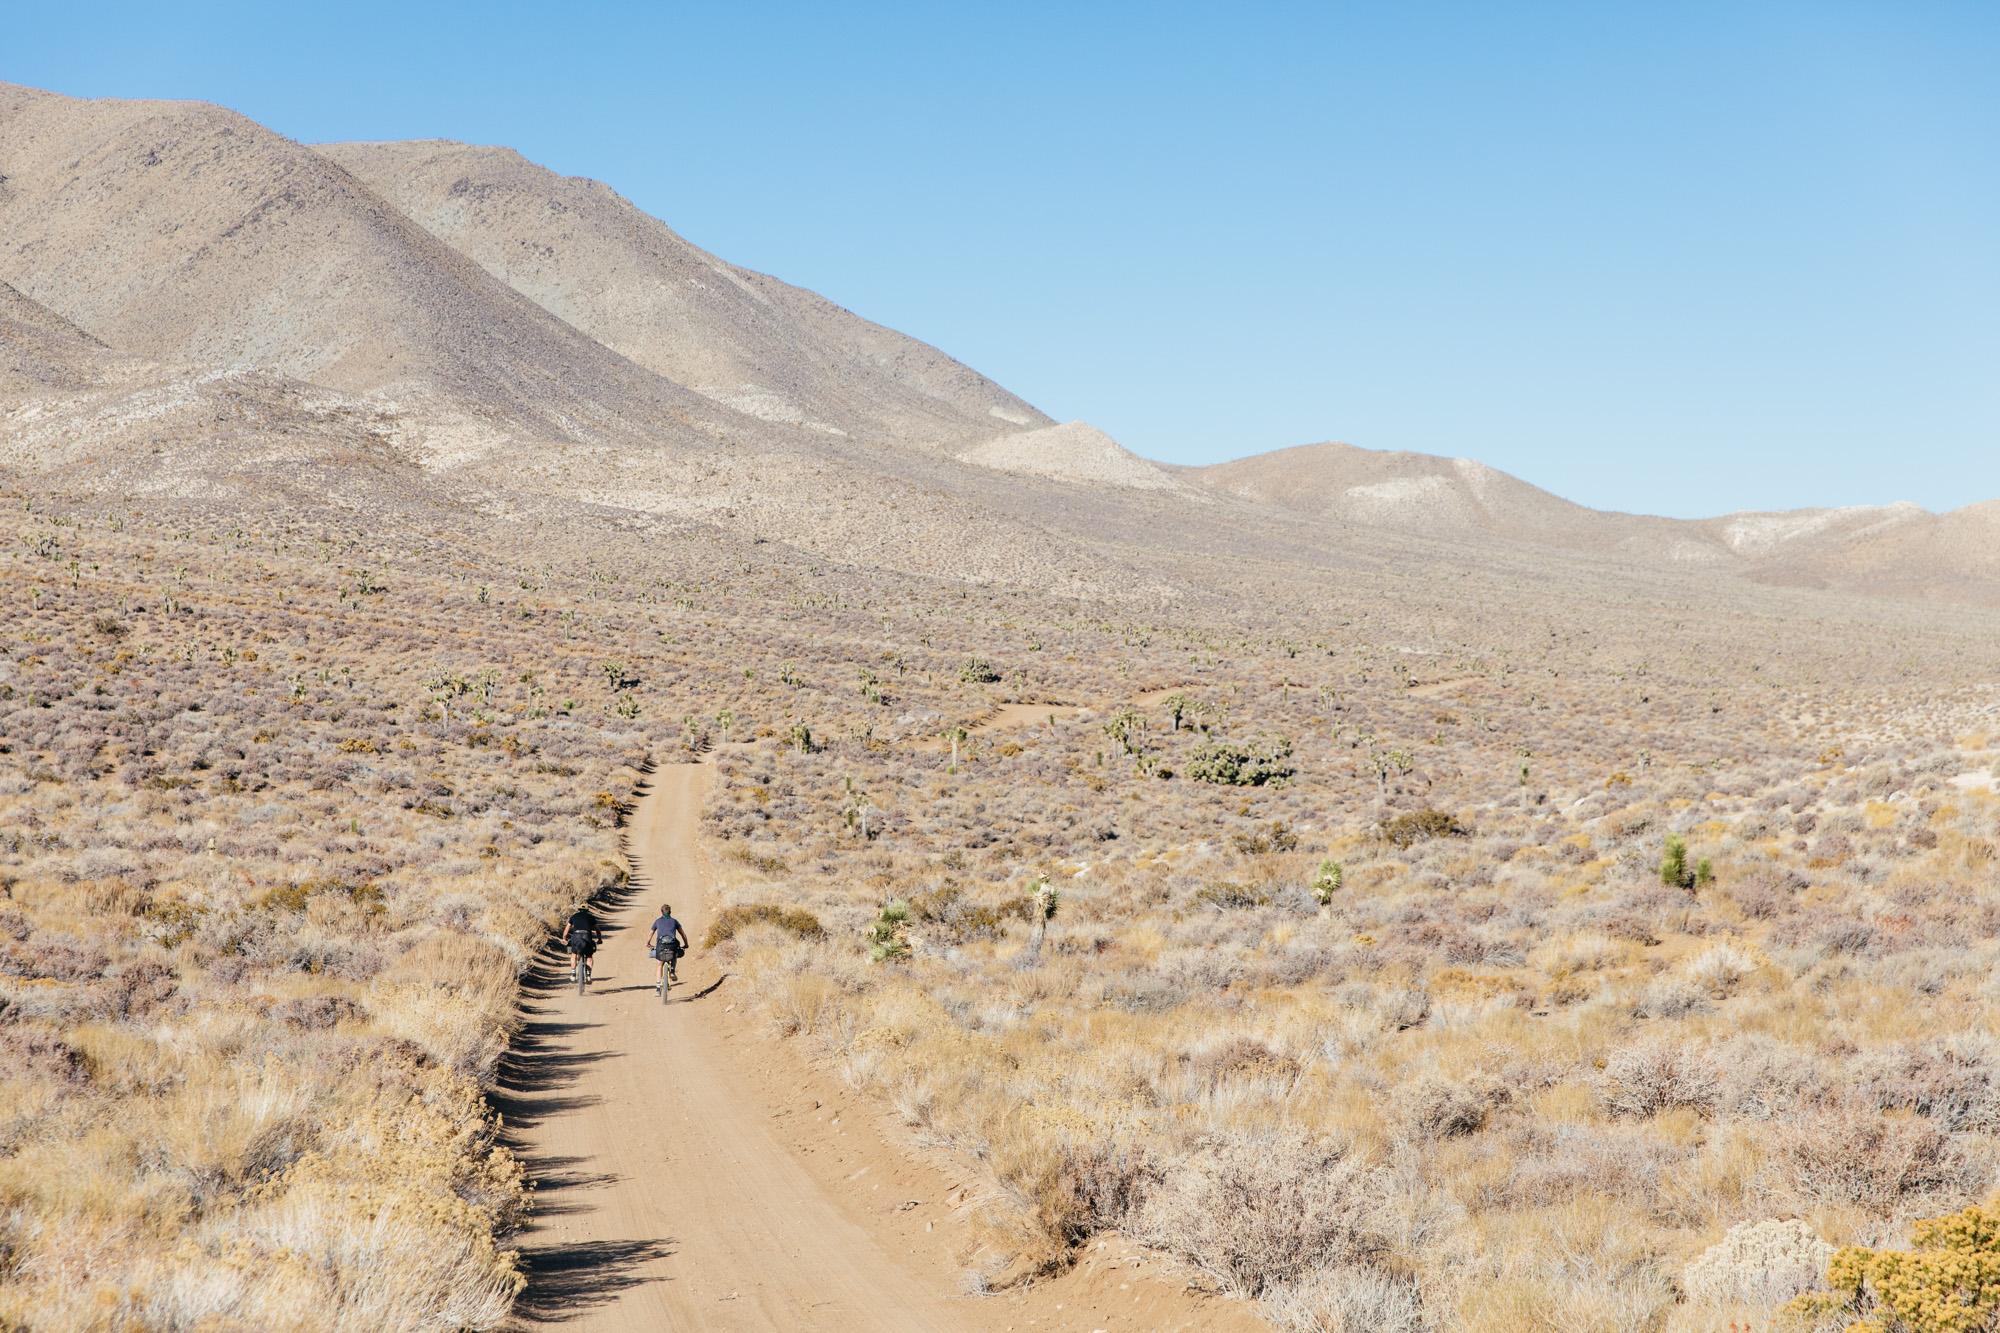 Bike touring in Death Valley